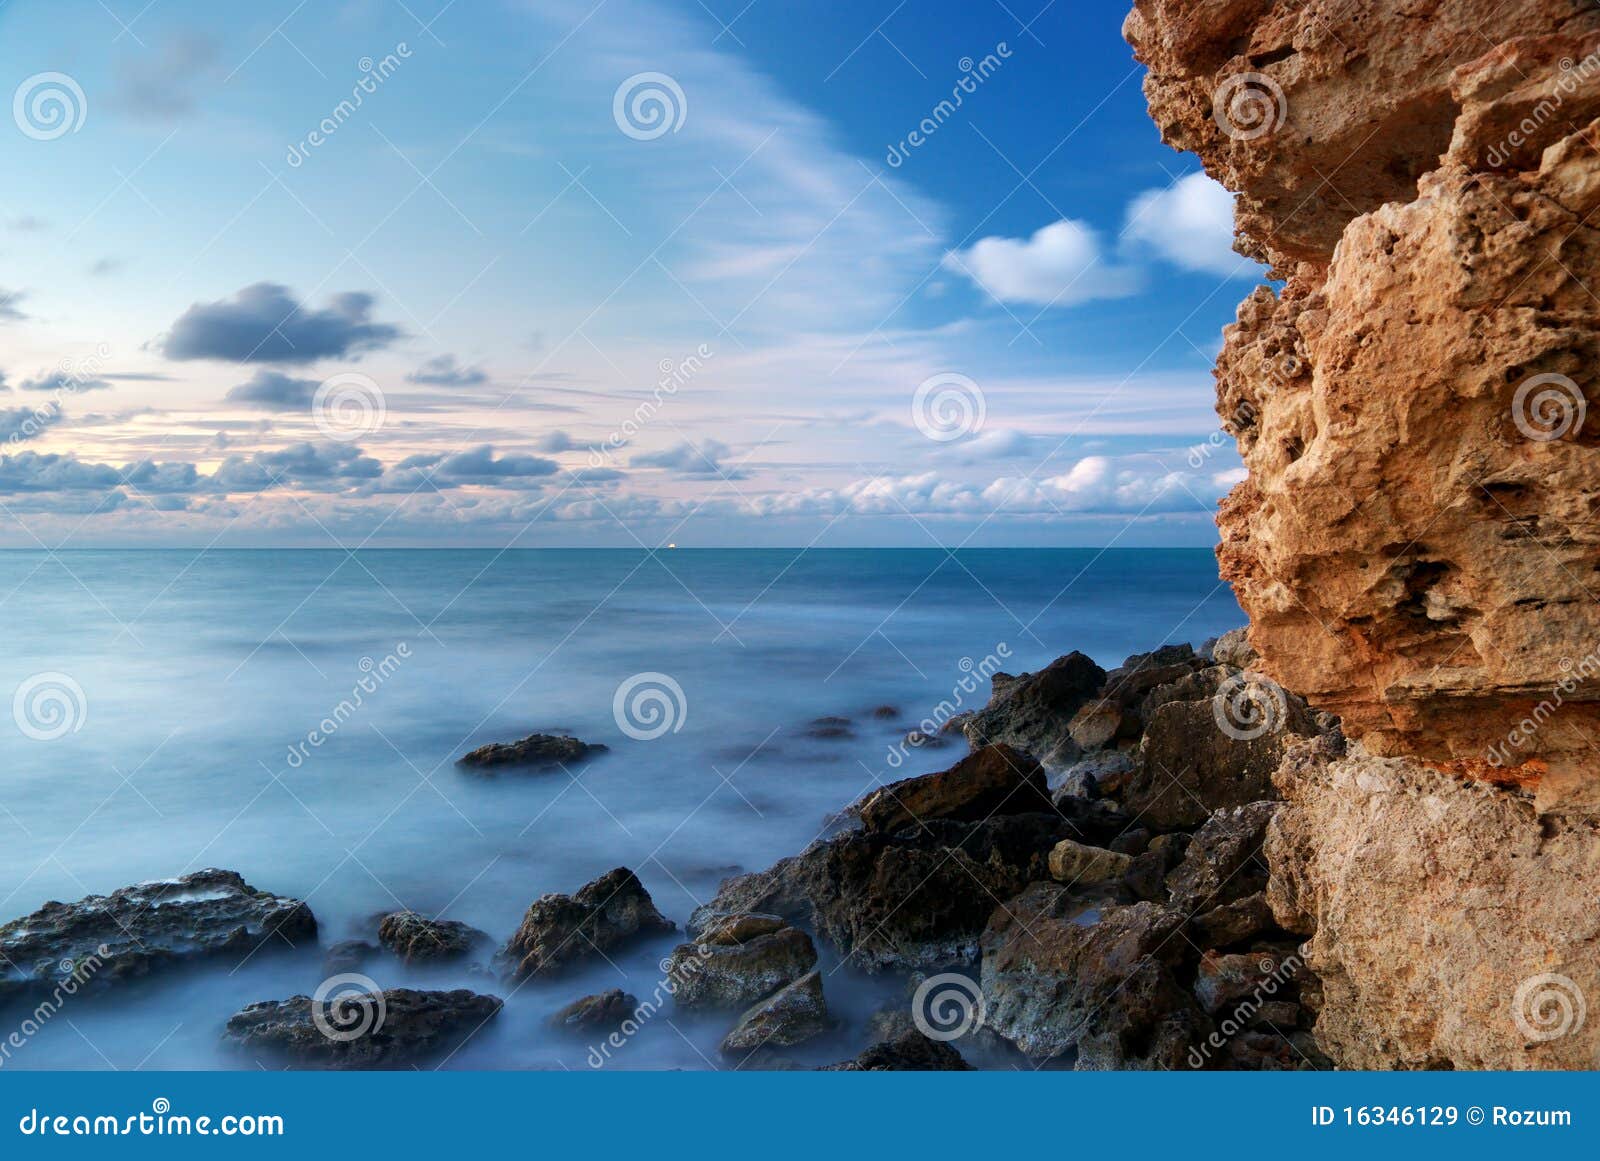 Sunset seascape stock image. Image of peaceful, colorful - 16346129